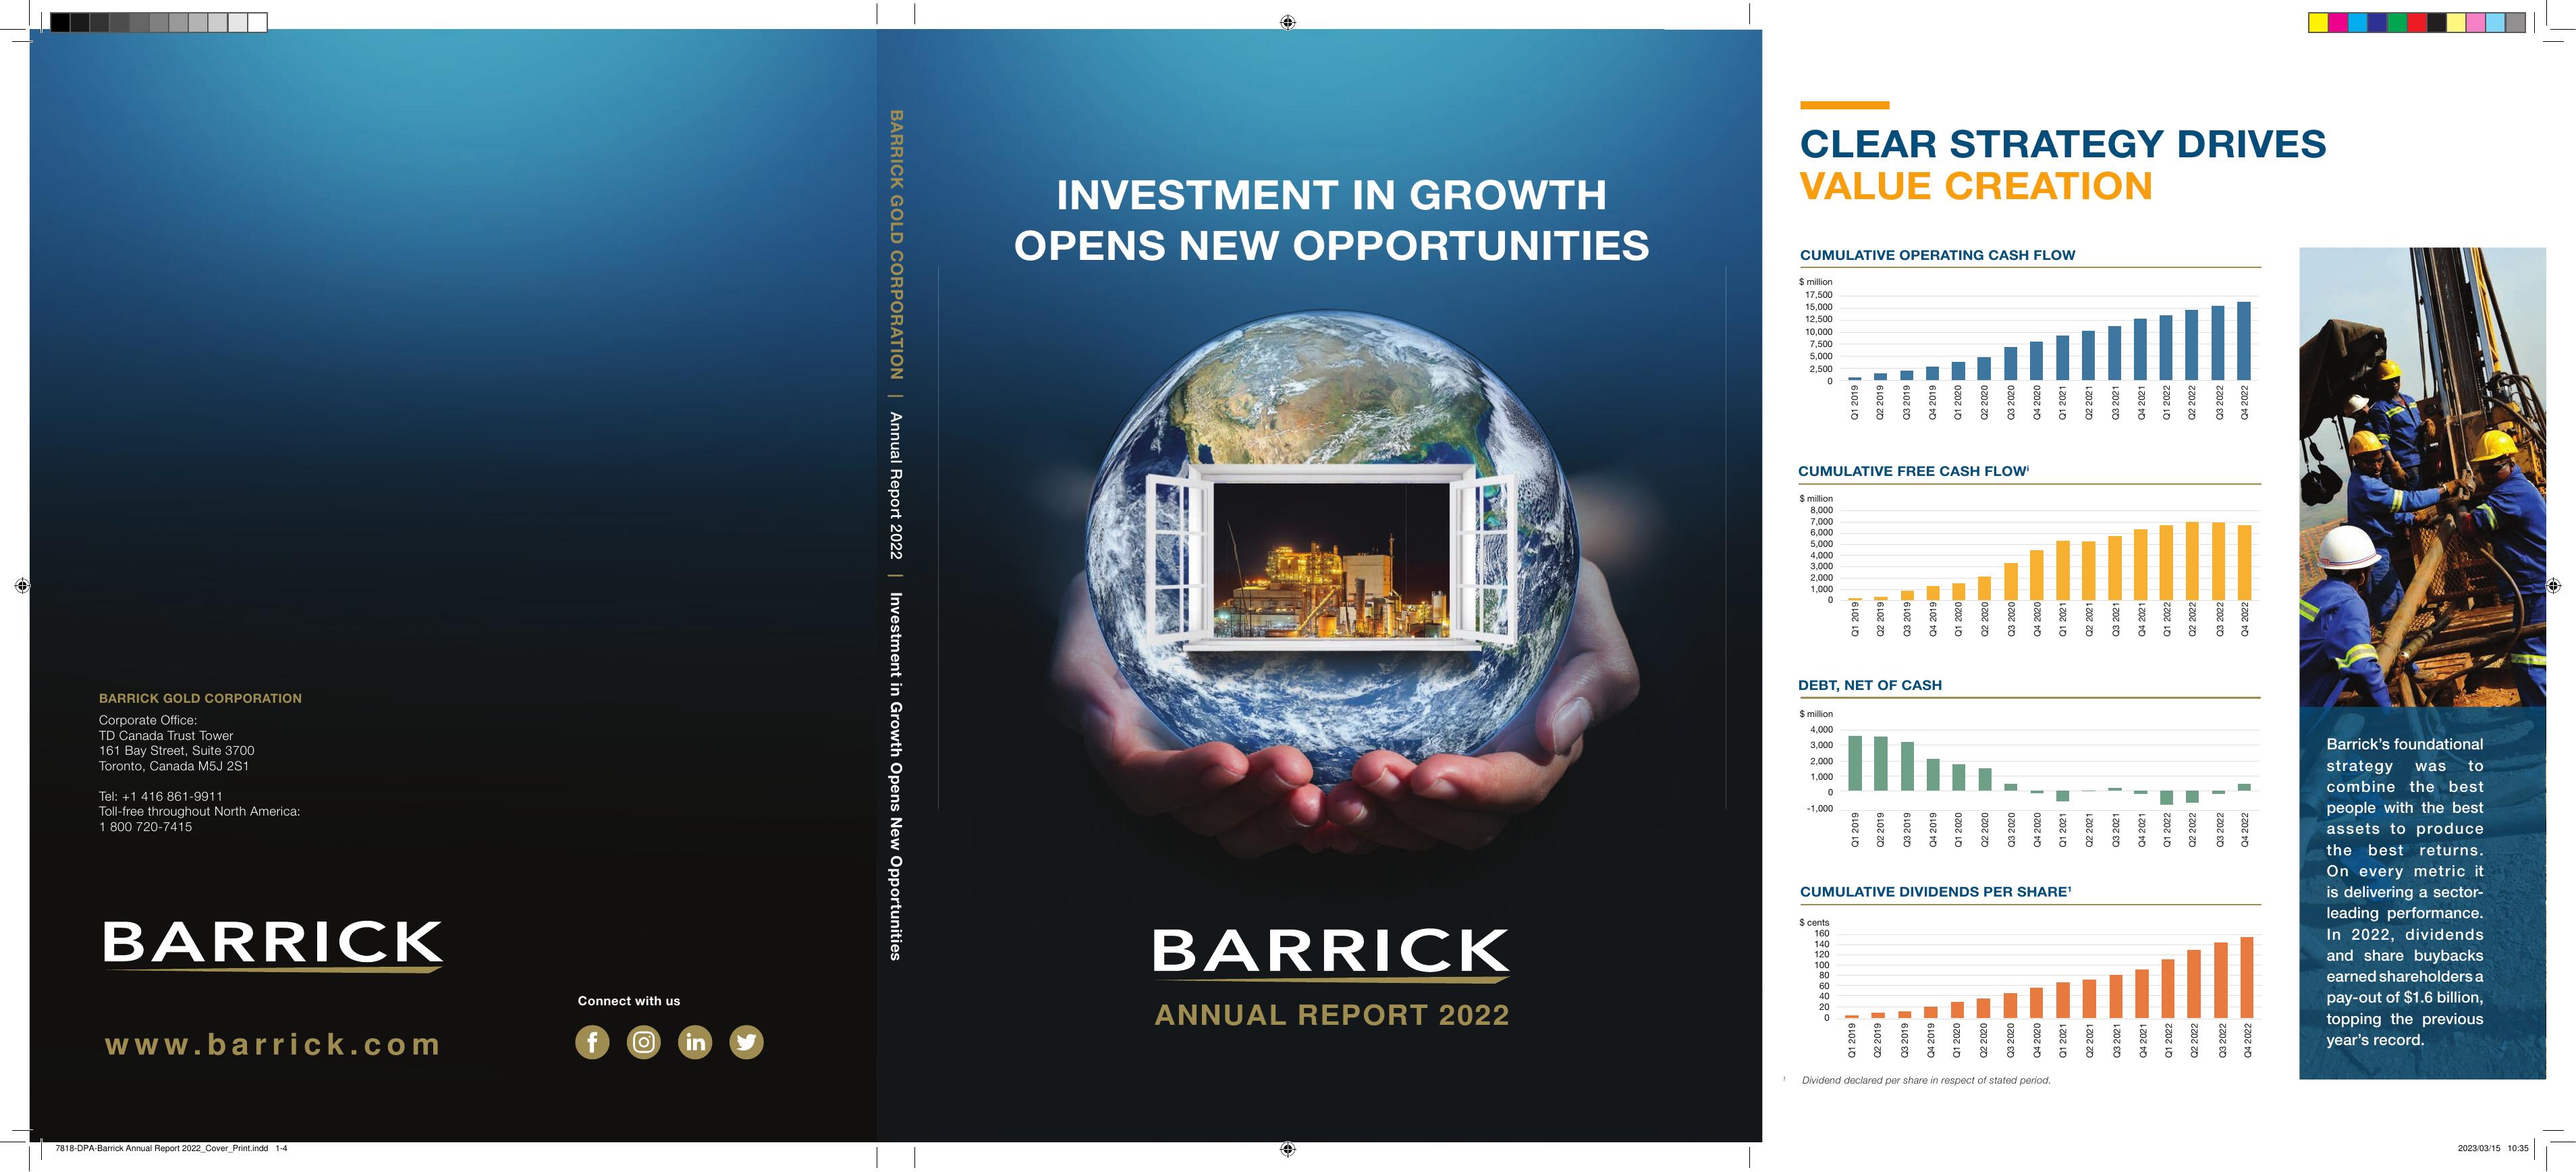 BARRICK 2022 Annual Report